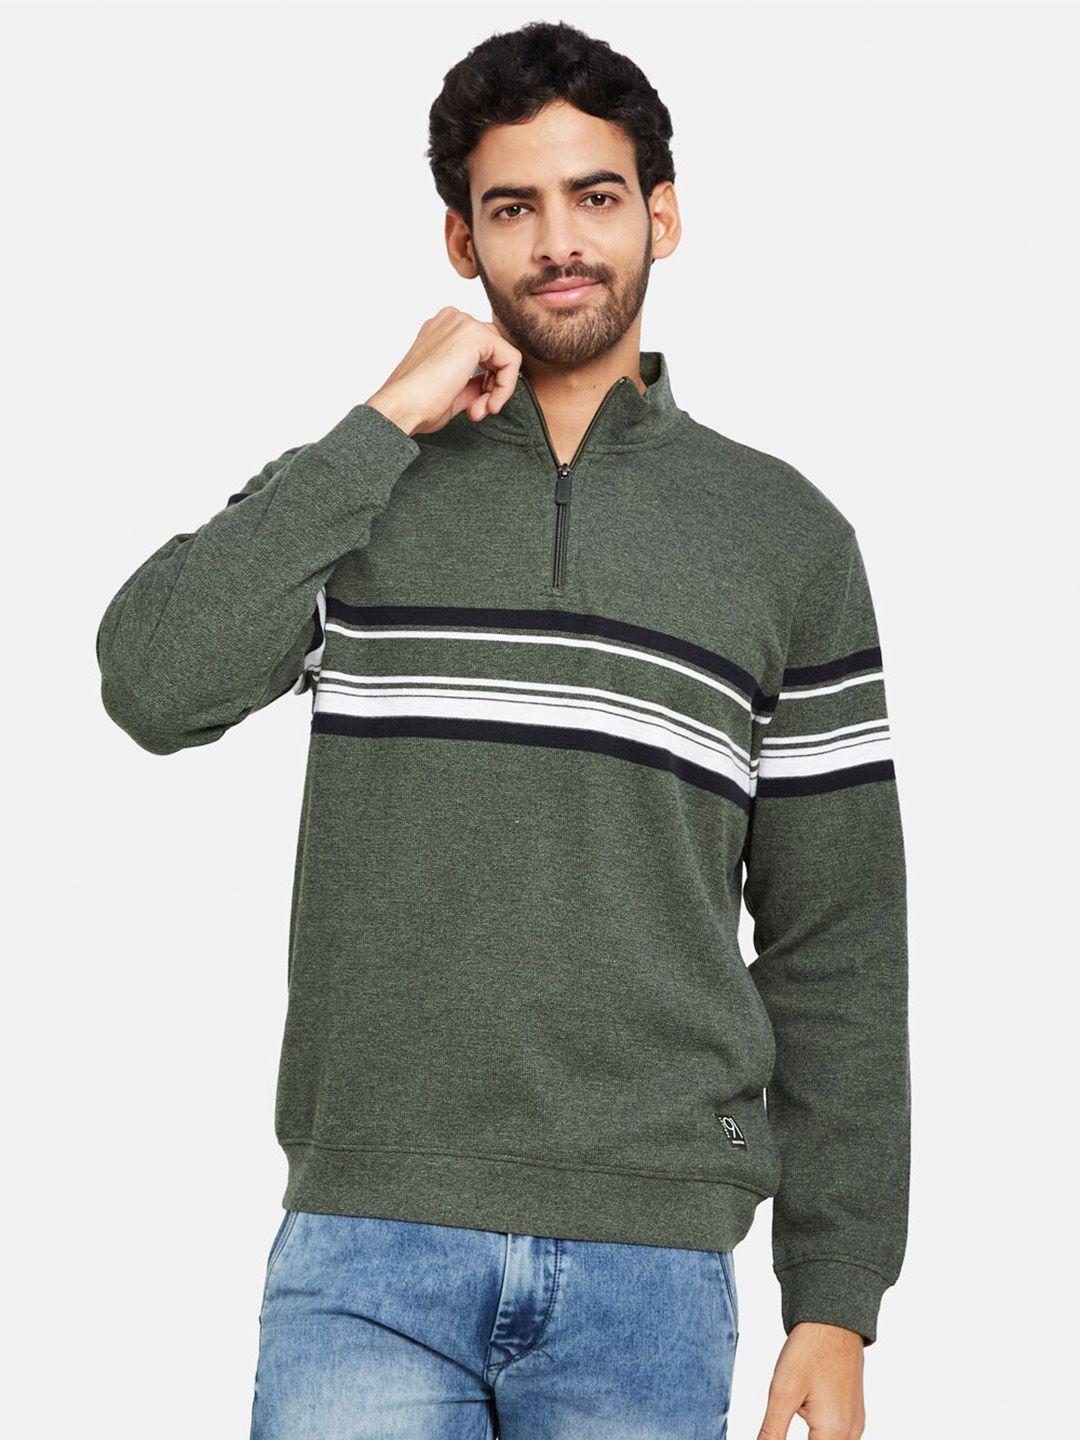 octave-mock-collar-striped-fleece-pullover-sweatshirt